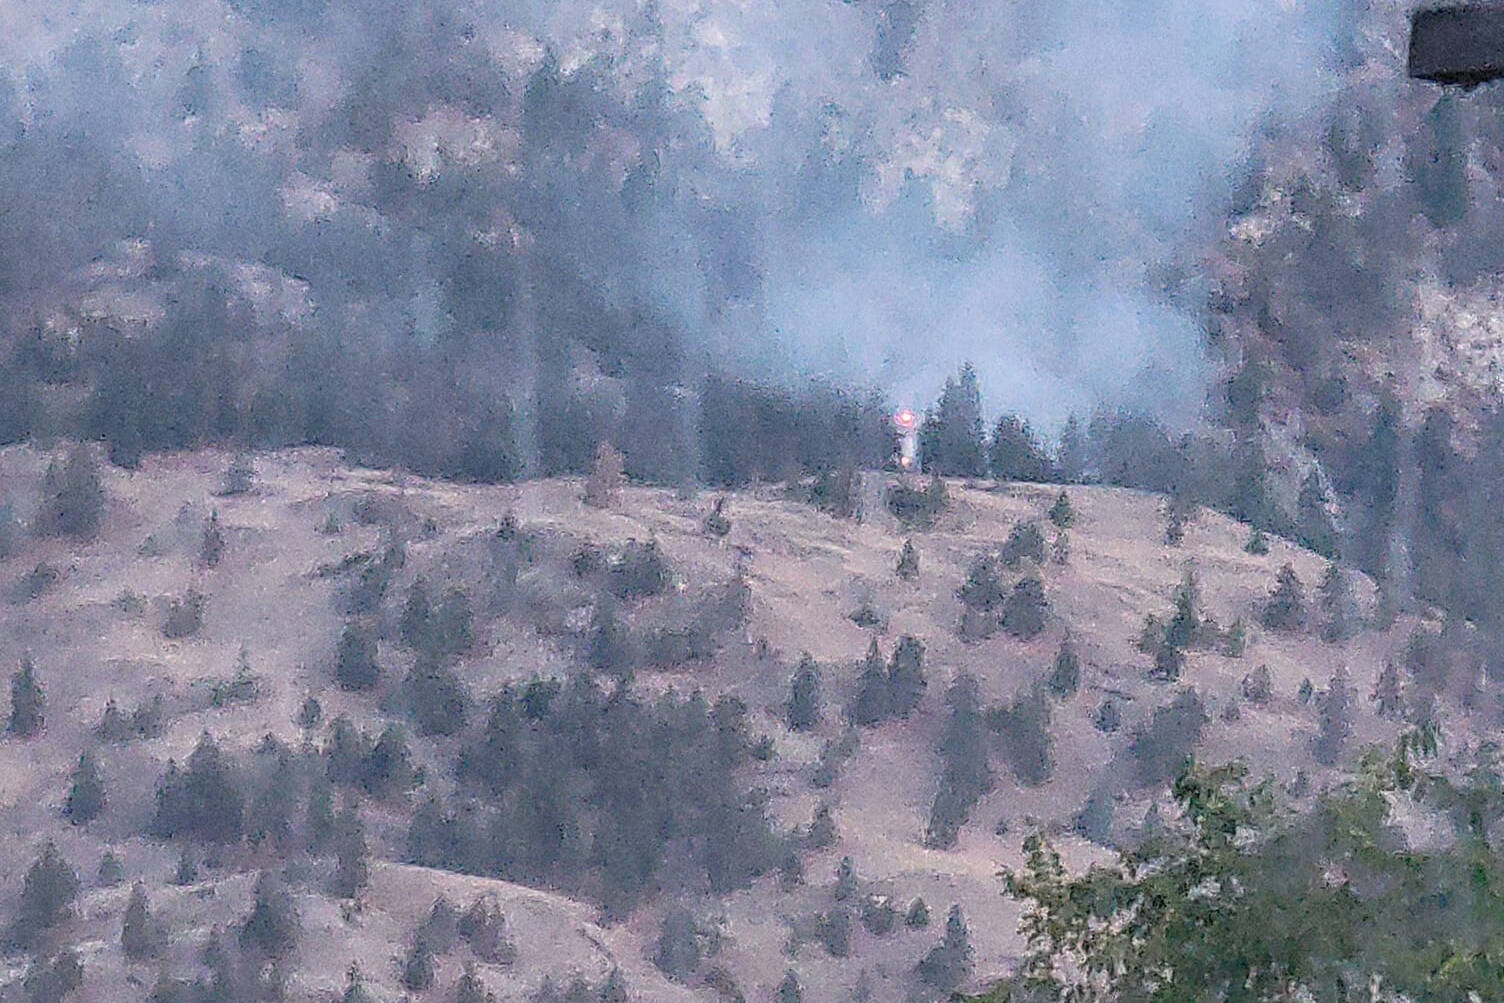 New fire on Jerry mountain. (Lisa Sine Facebook)